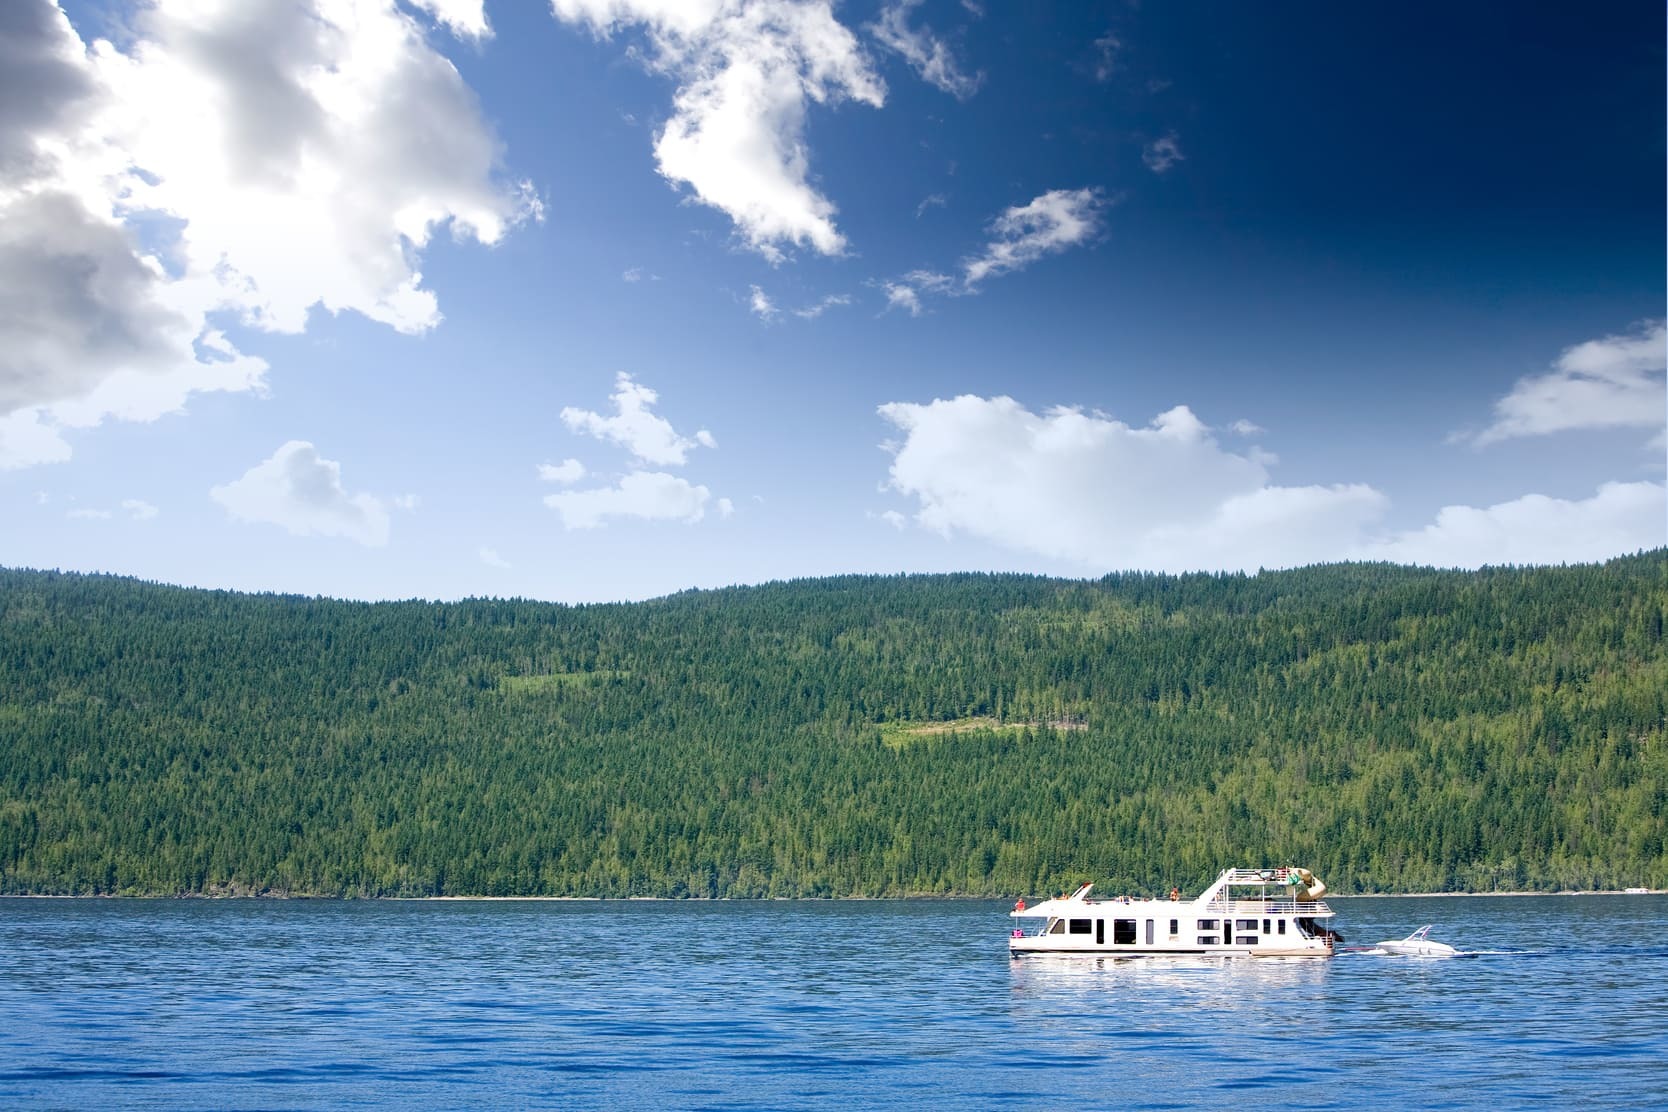 House boat on Shuswap Lake near Scotch Creek, British Columbia